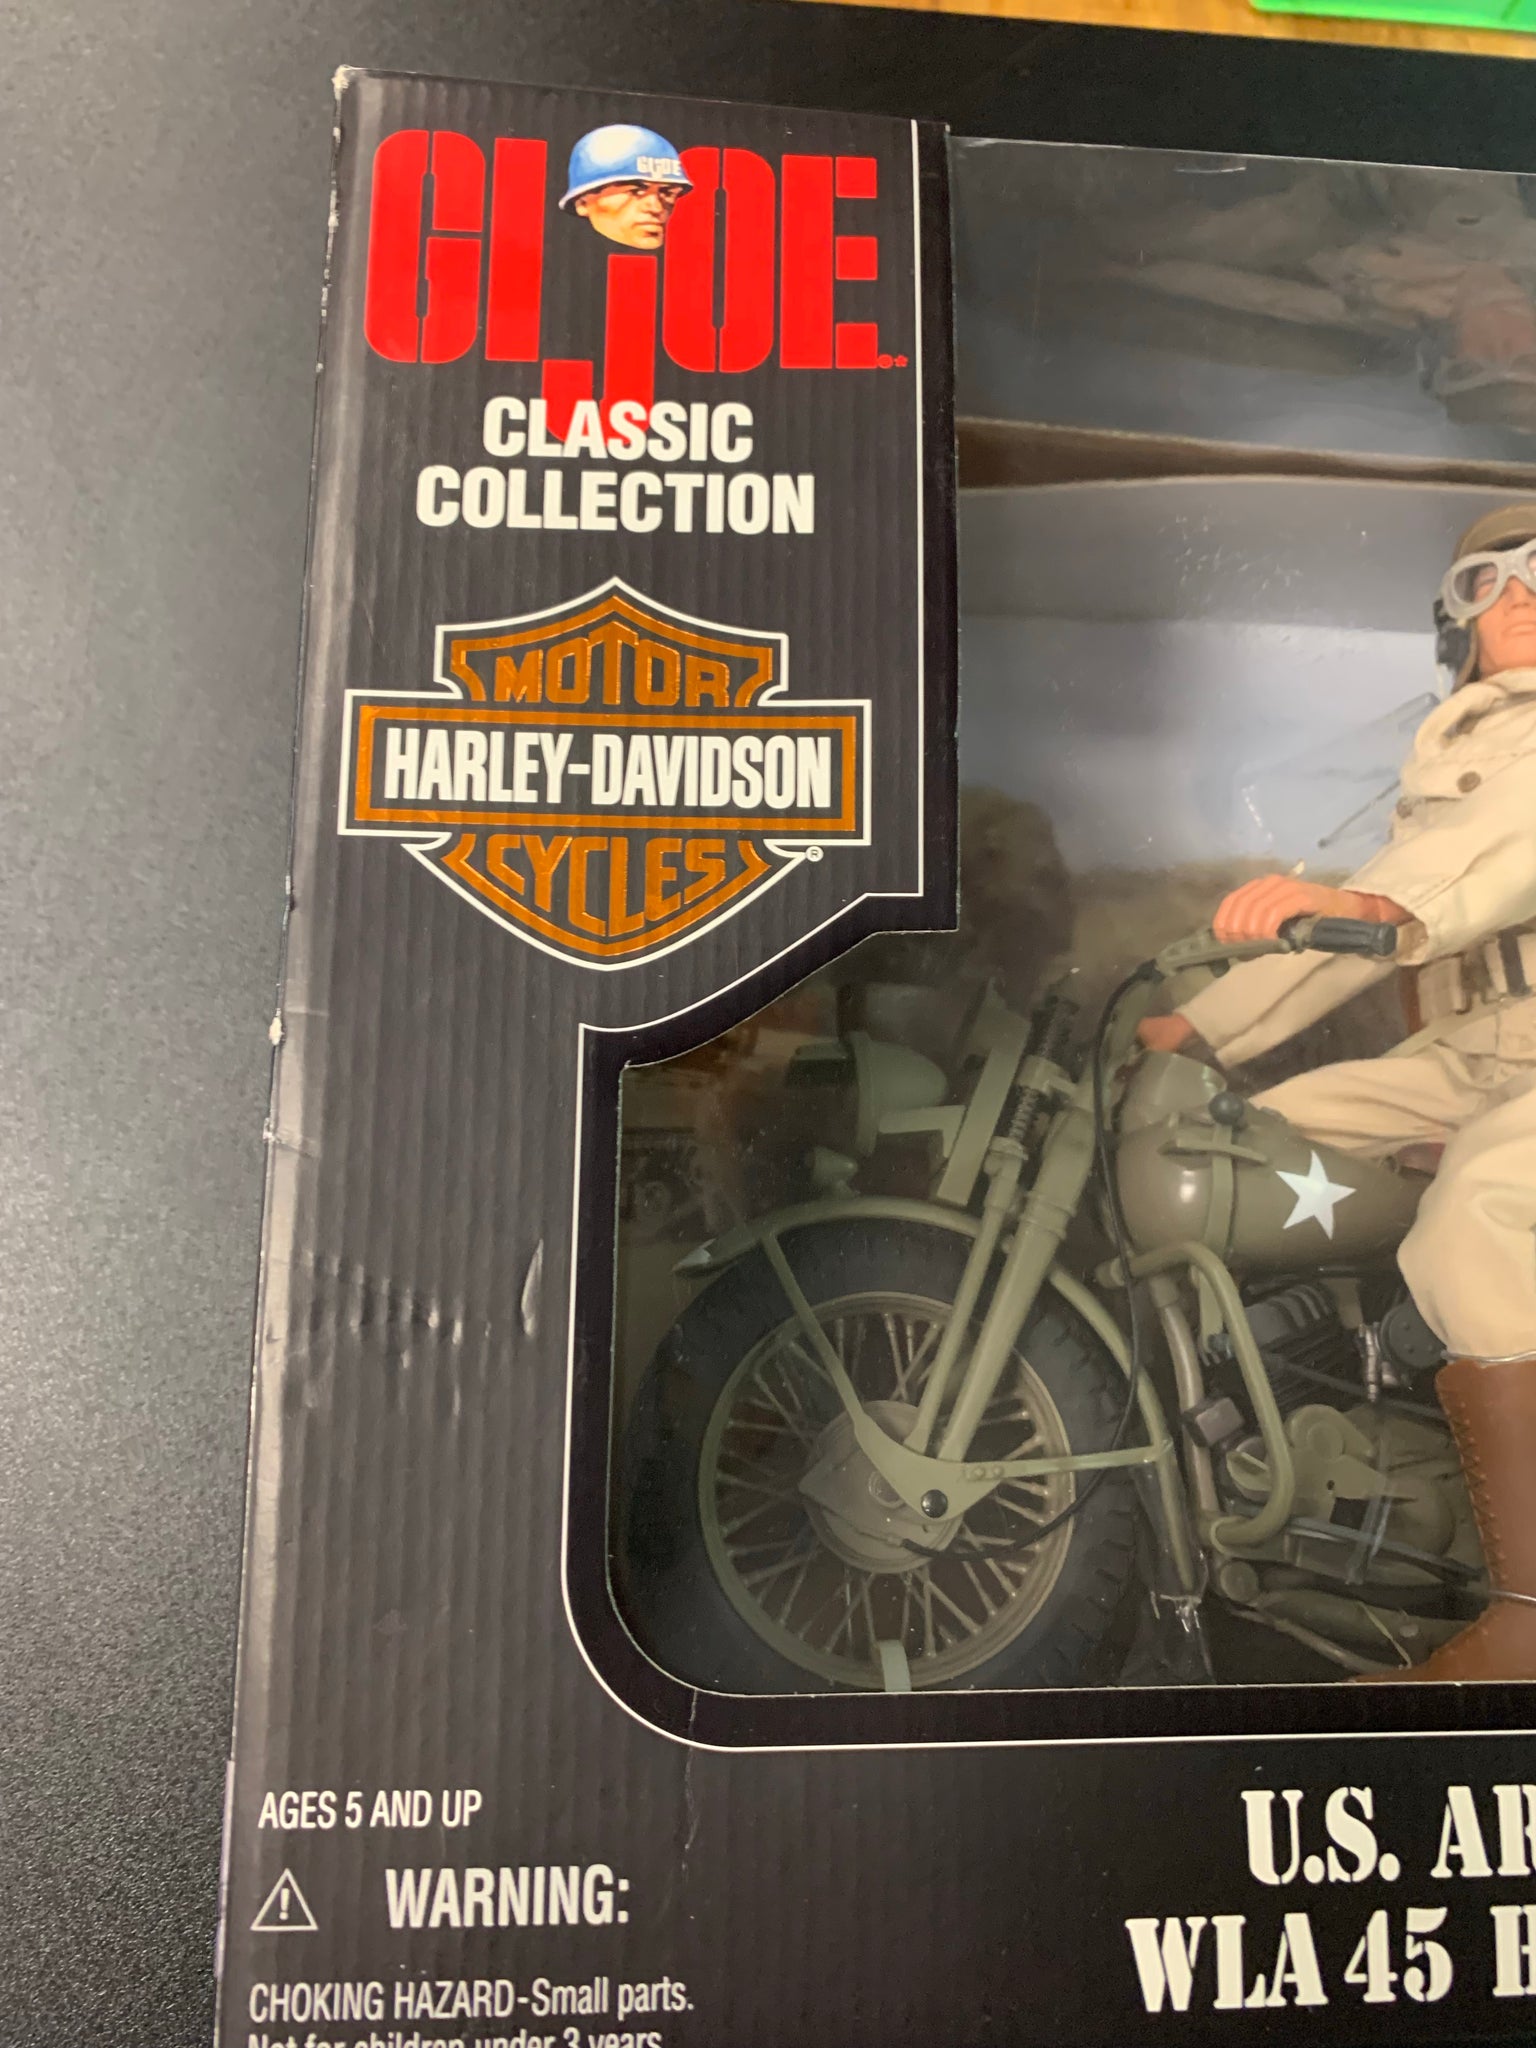 HASBRO G.I. JOE CLASSIC COLLECTION HARLEY DAVIDSON MOTOR CUCLES US ARMY  COURIER & WLA 45 HARLEY-DAVIDSON